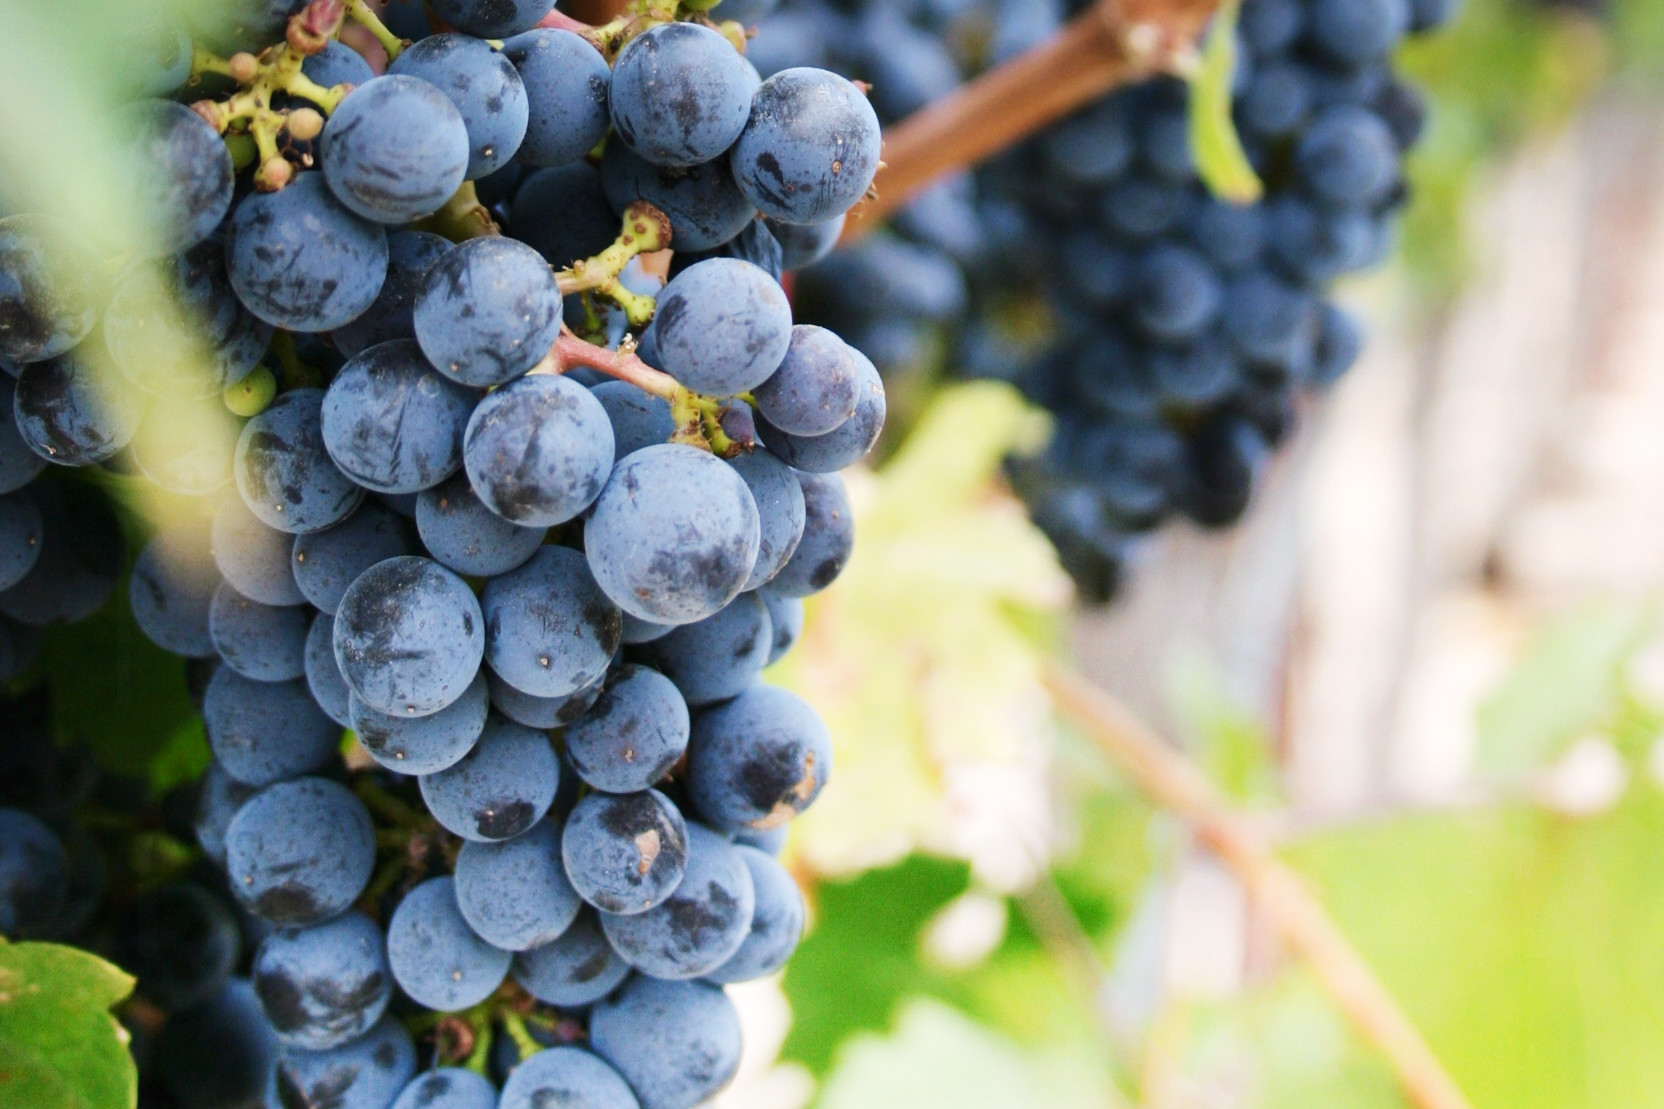 USA_California_Sonoma_Gundlach Bundschu Winery_vinyard grapes.jpg